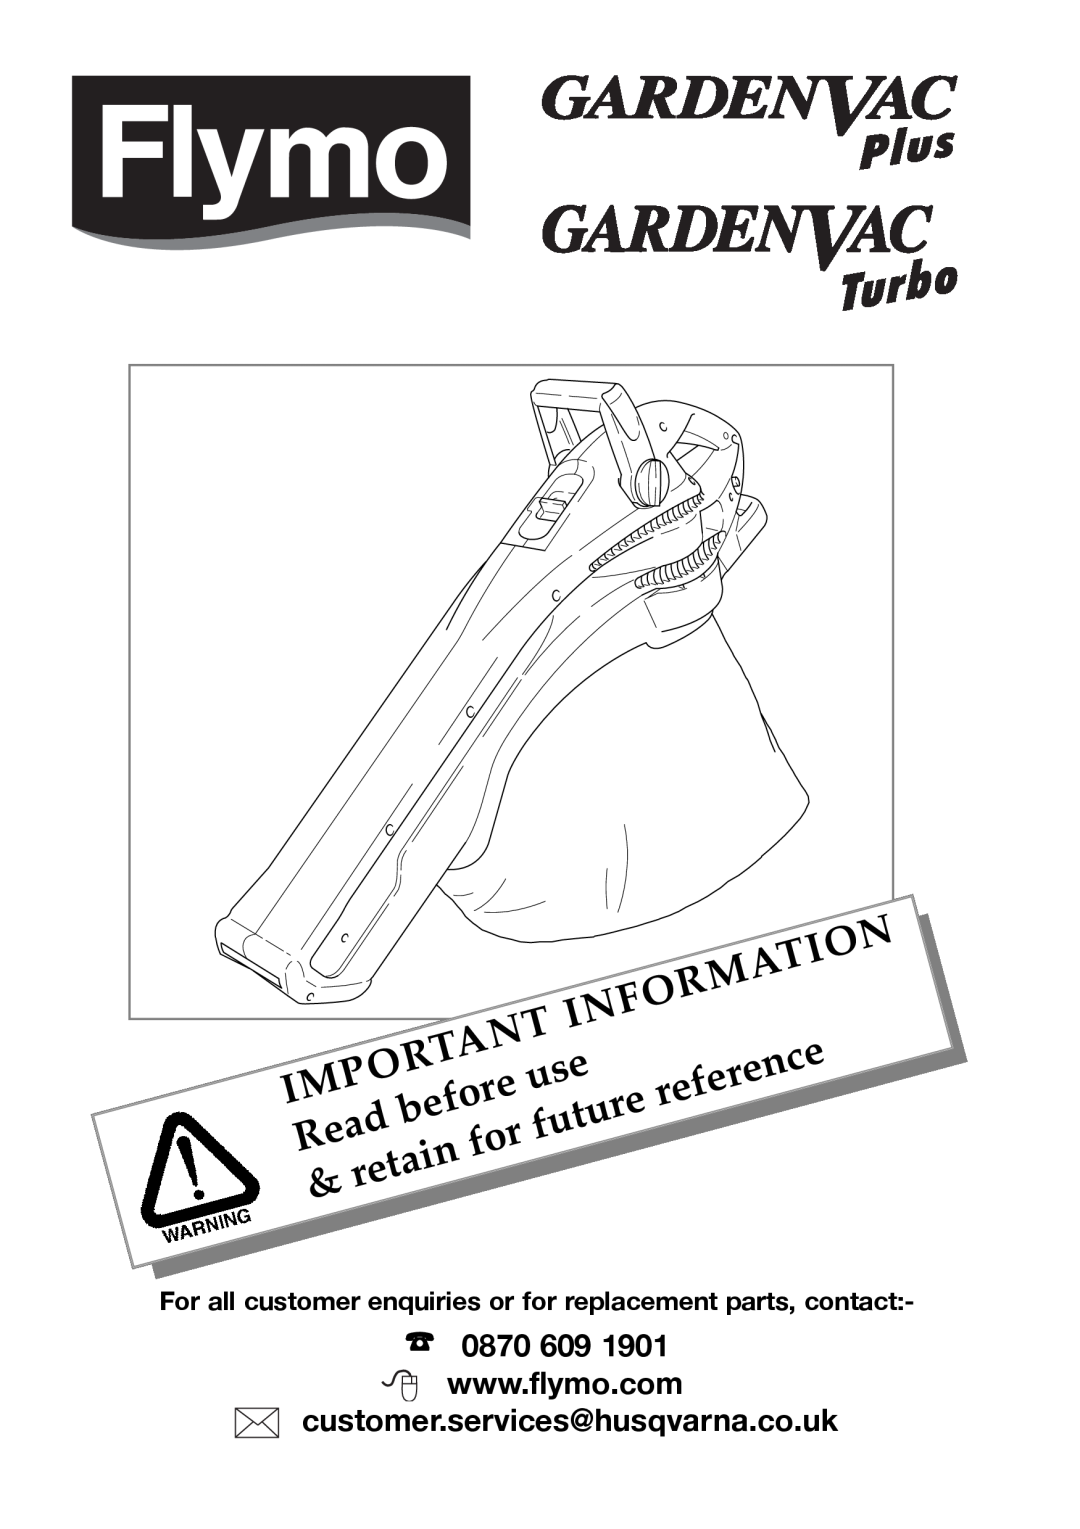 Flymo Garden Vac manual Information, reference, Read, before, future, retain, customer.services@husqvarna.co.uk 